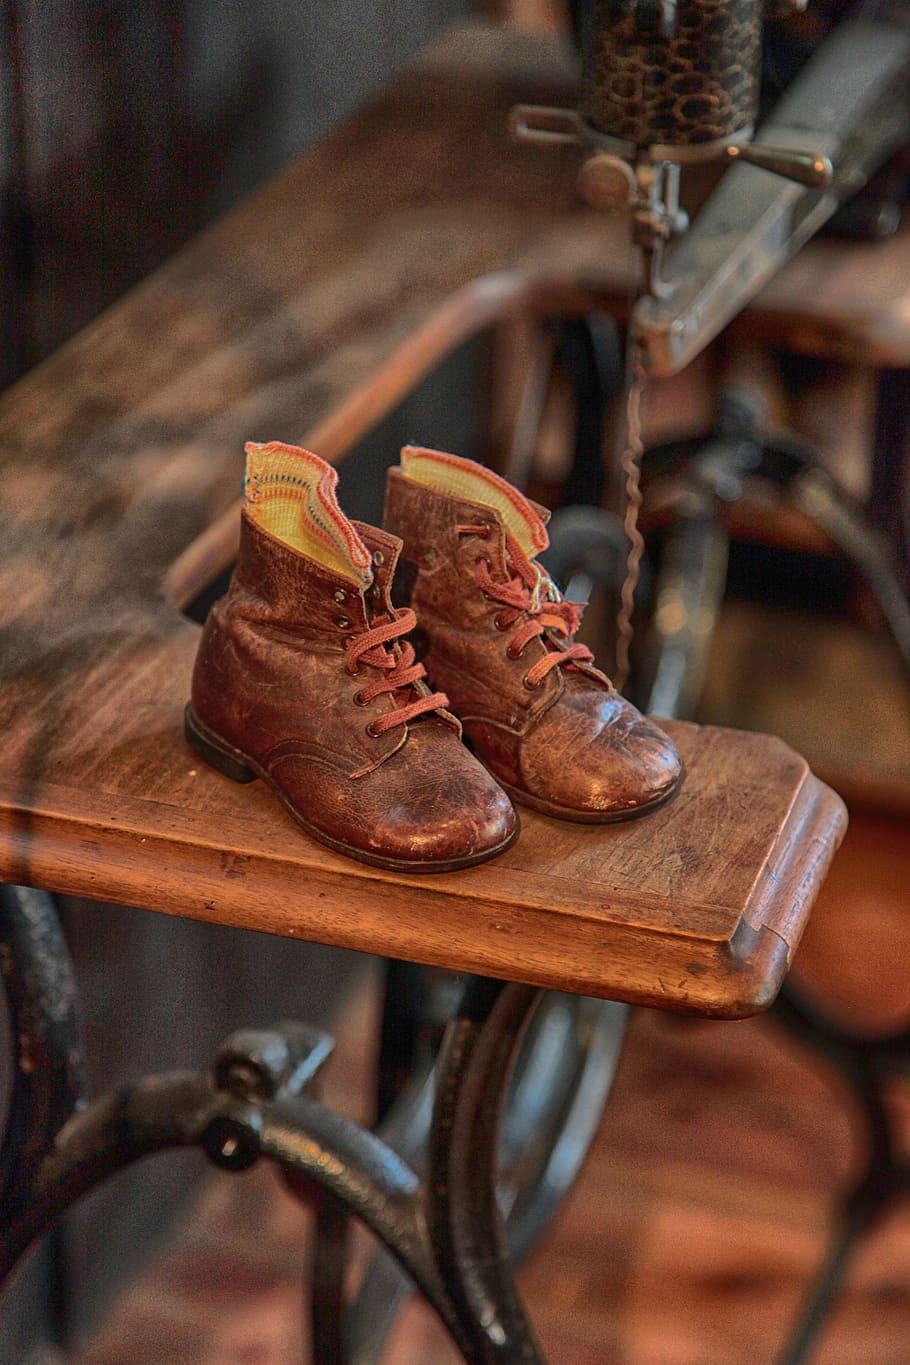 shoemaker, children's shoes, shoes, workshop, old, leather, old shoes, cute, children, girl